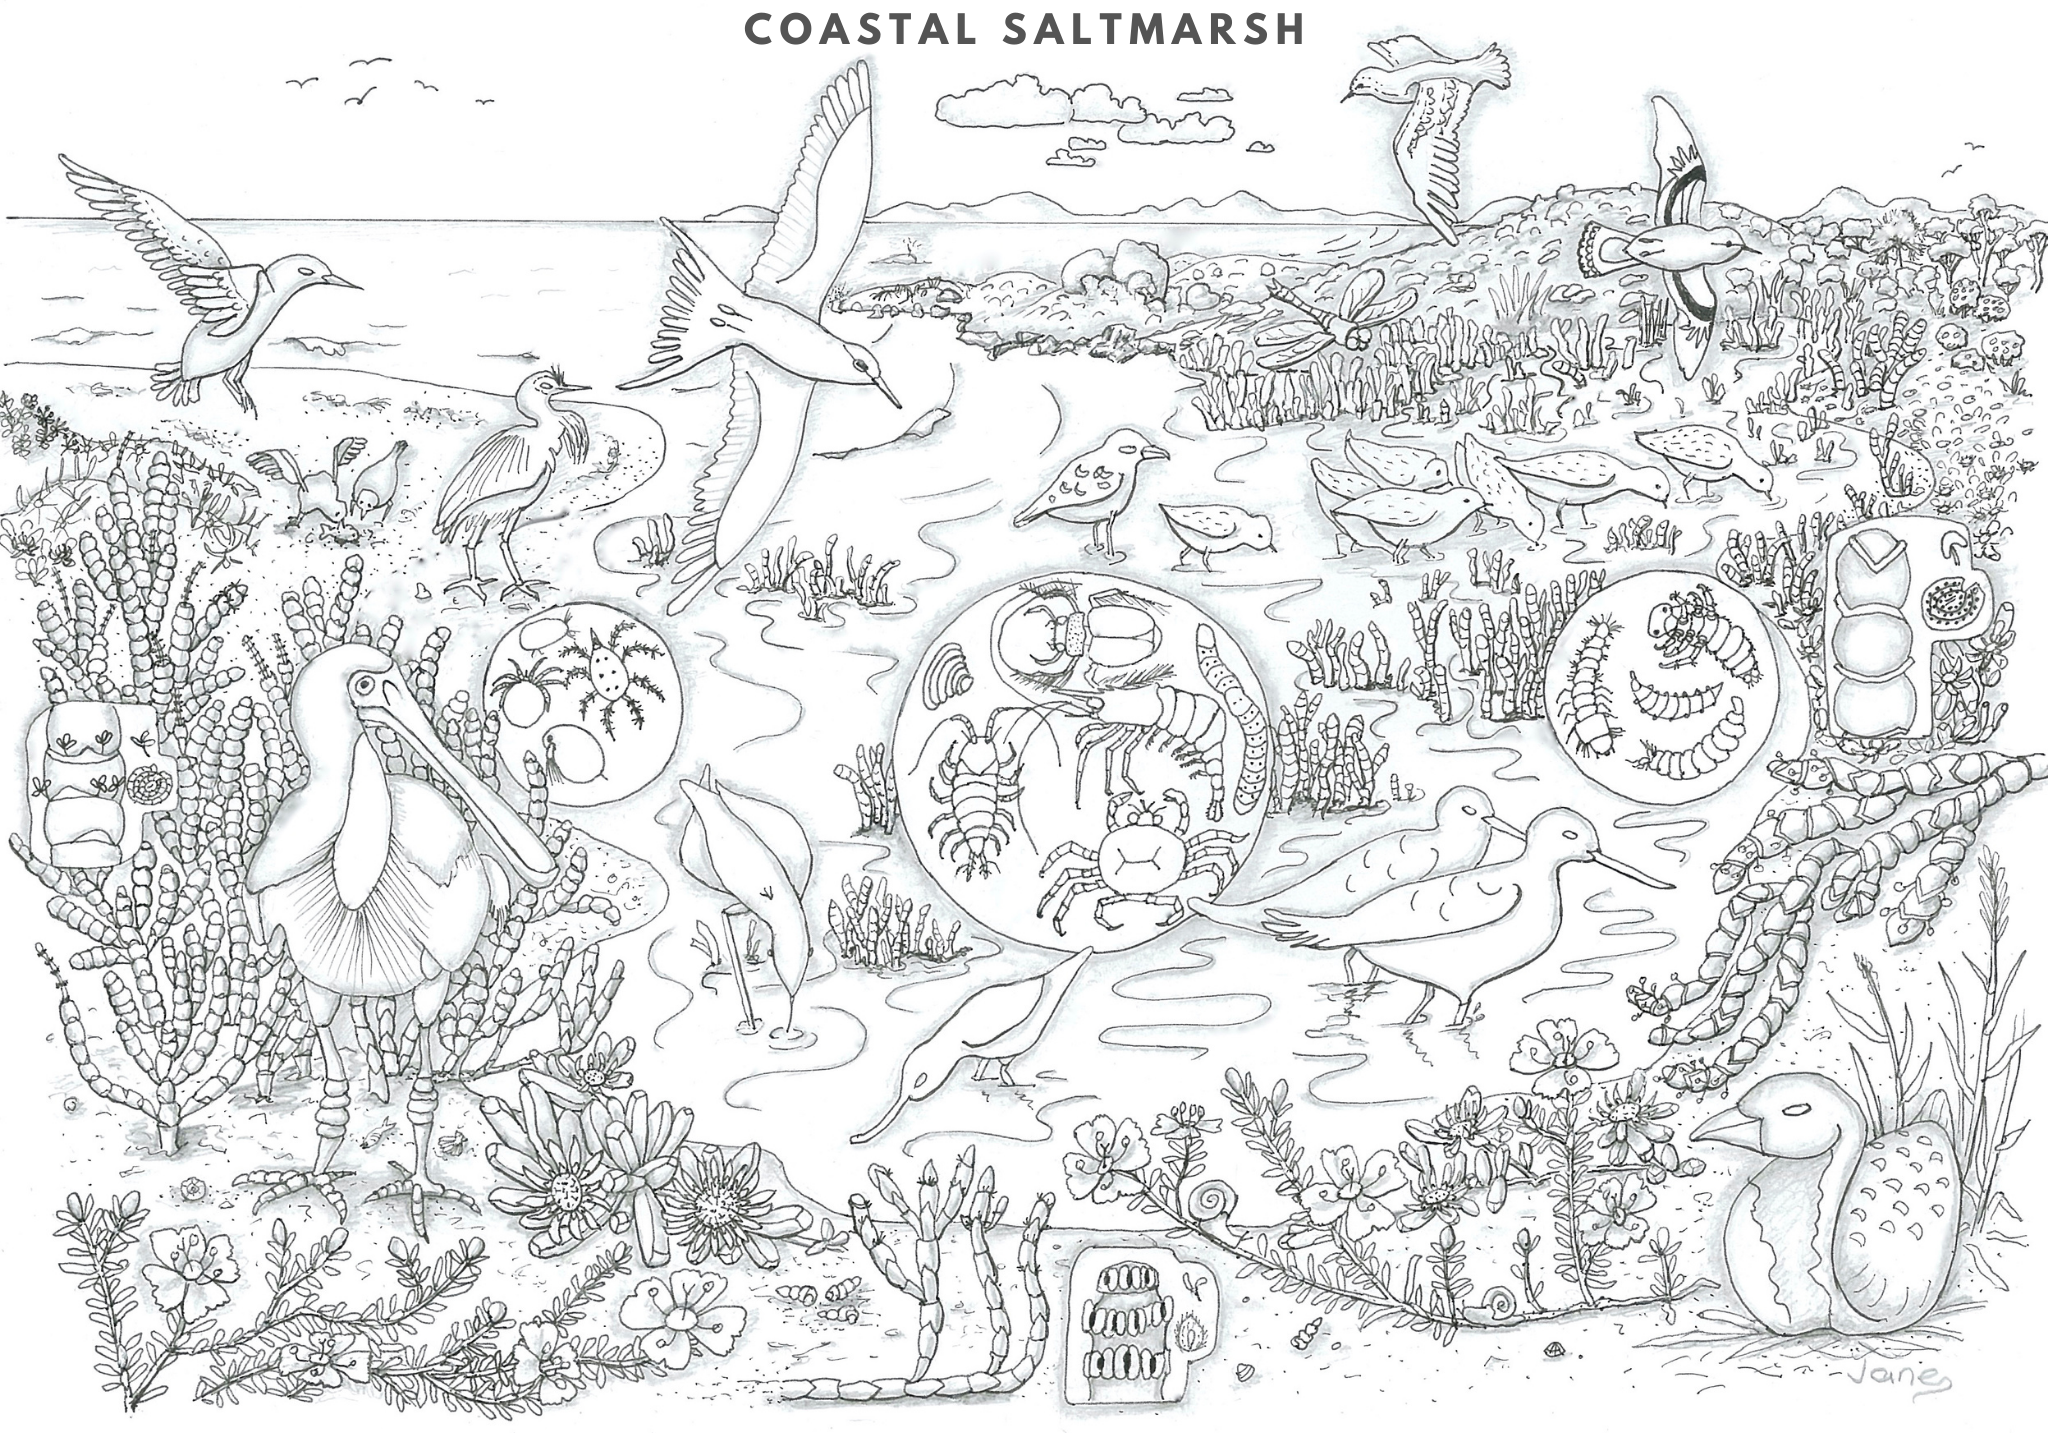 https://southcoastnrm.com.au/wp-content/uploads/2022/04/Coastal-Saltmarsh-colouring-in.pdf